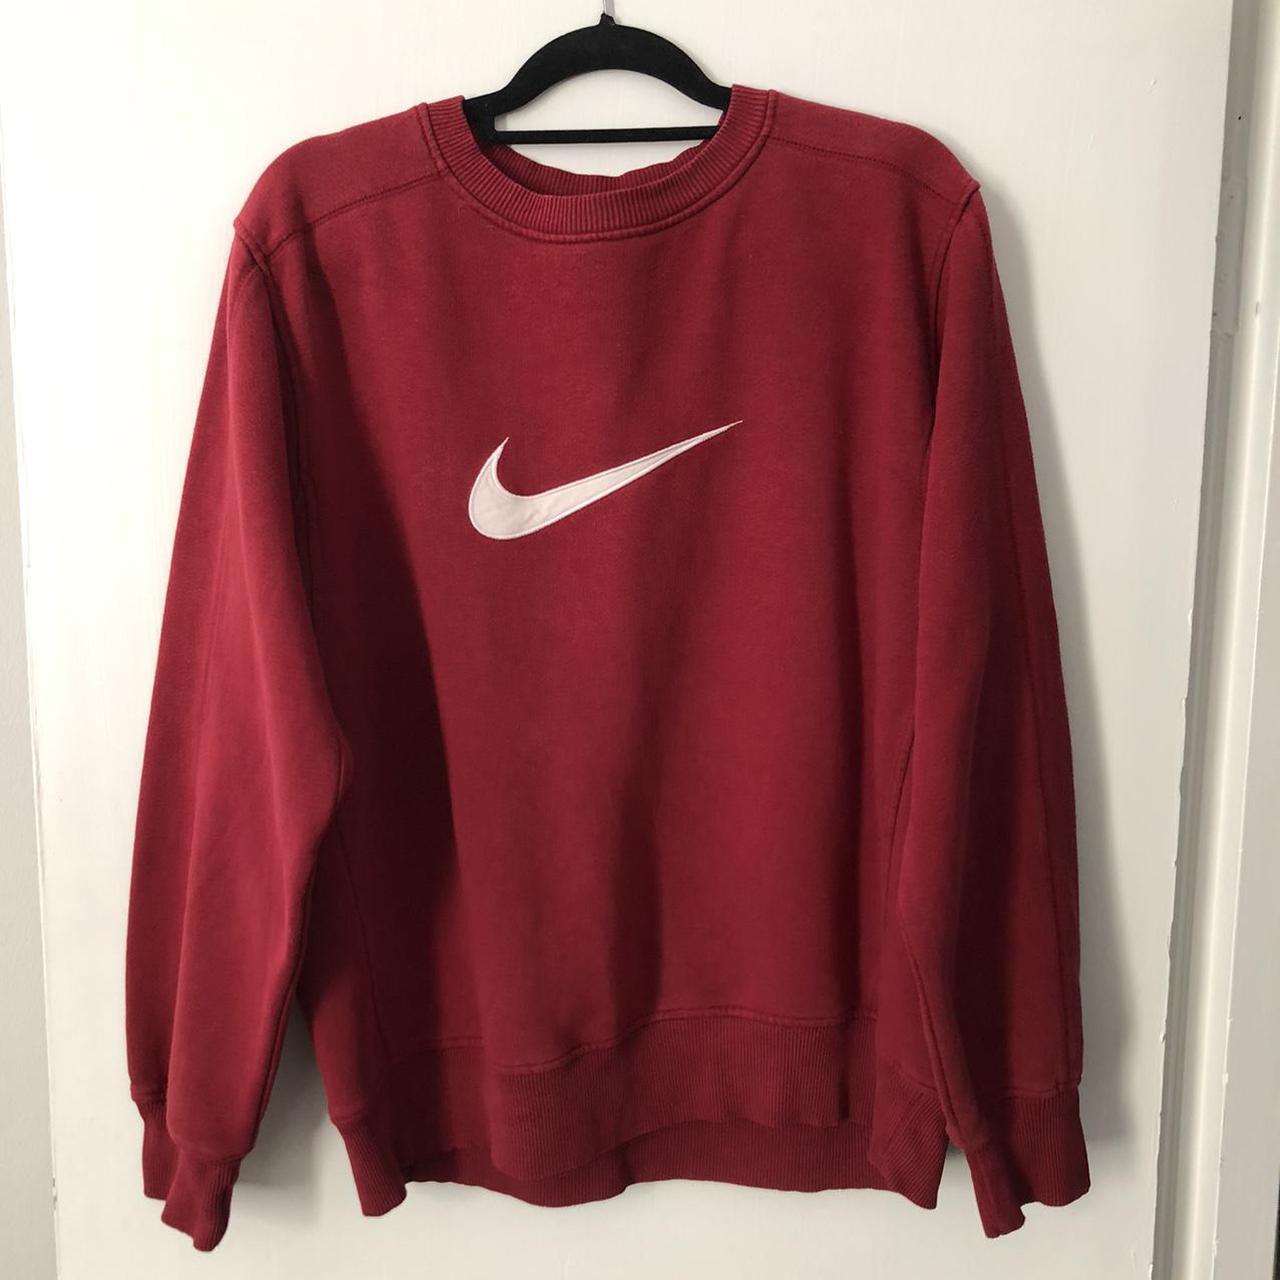 Nike burgundy/red centre swoosh sweatshirt.... - Depop